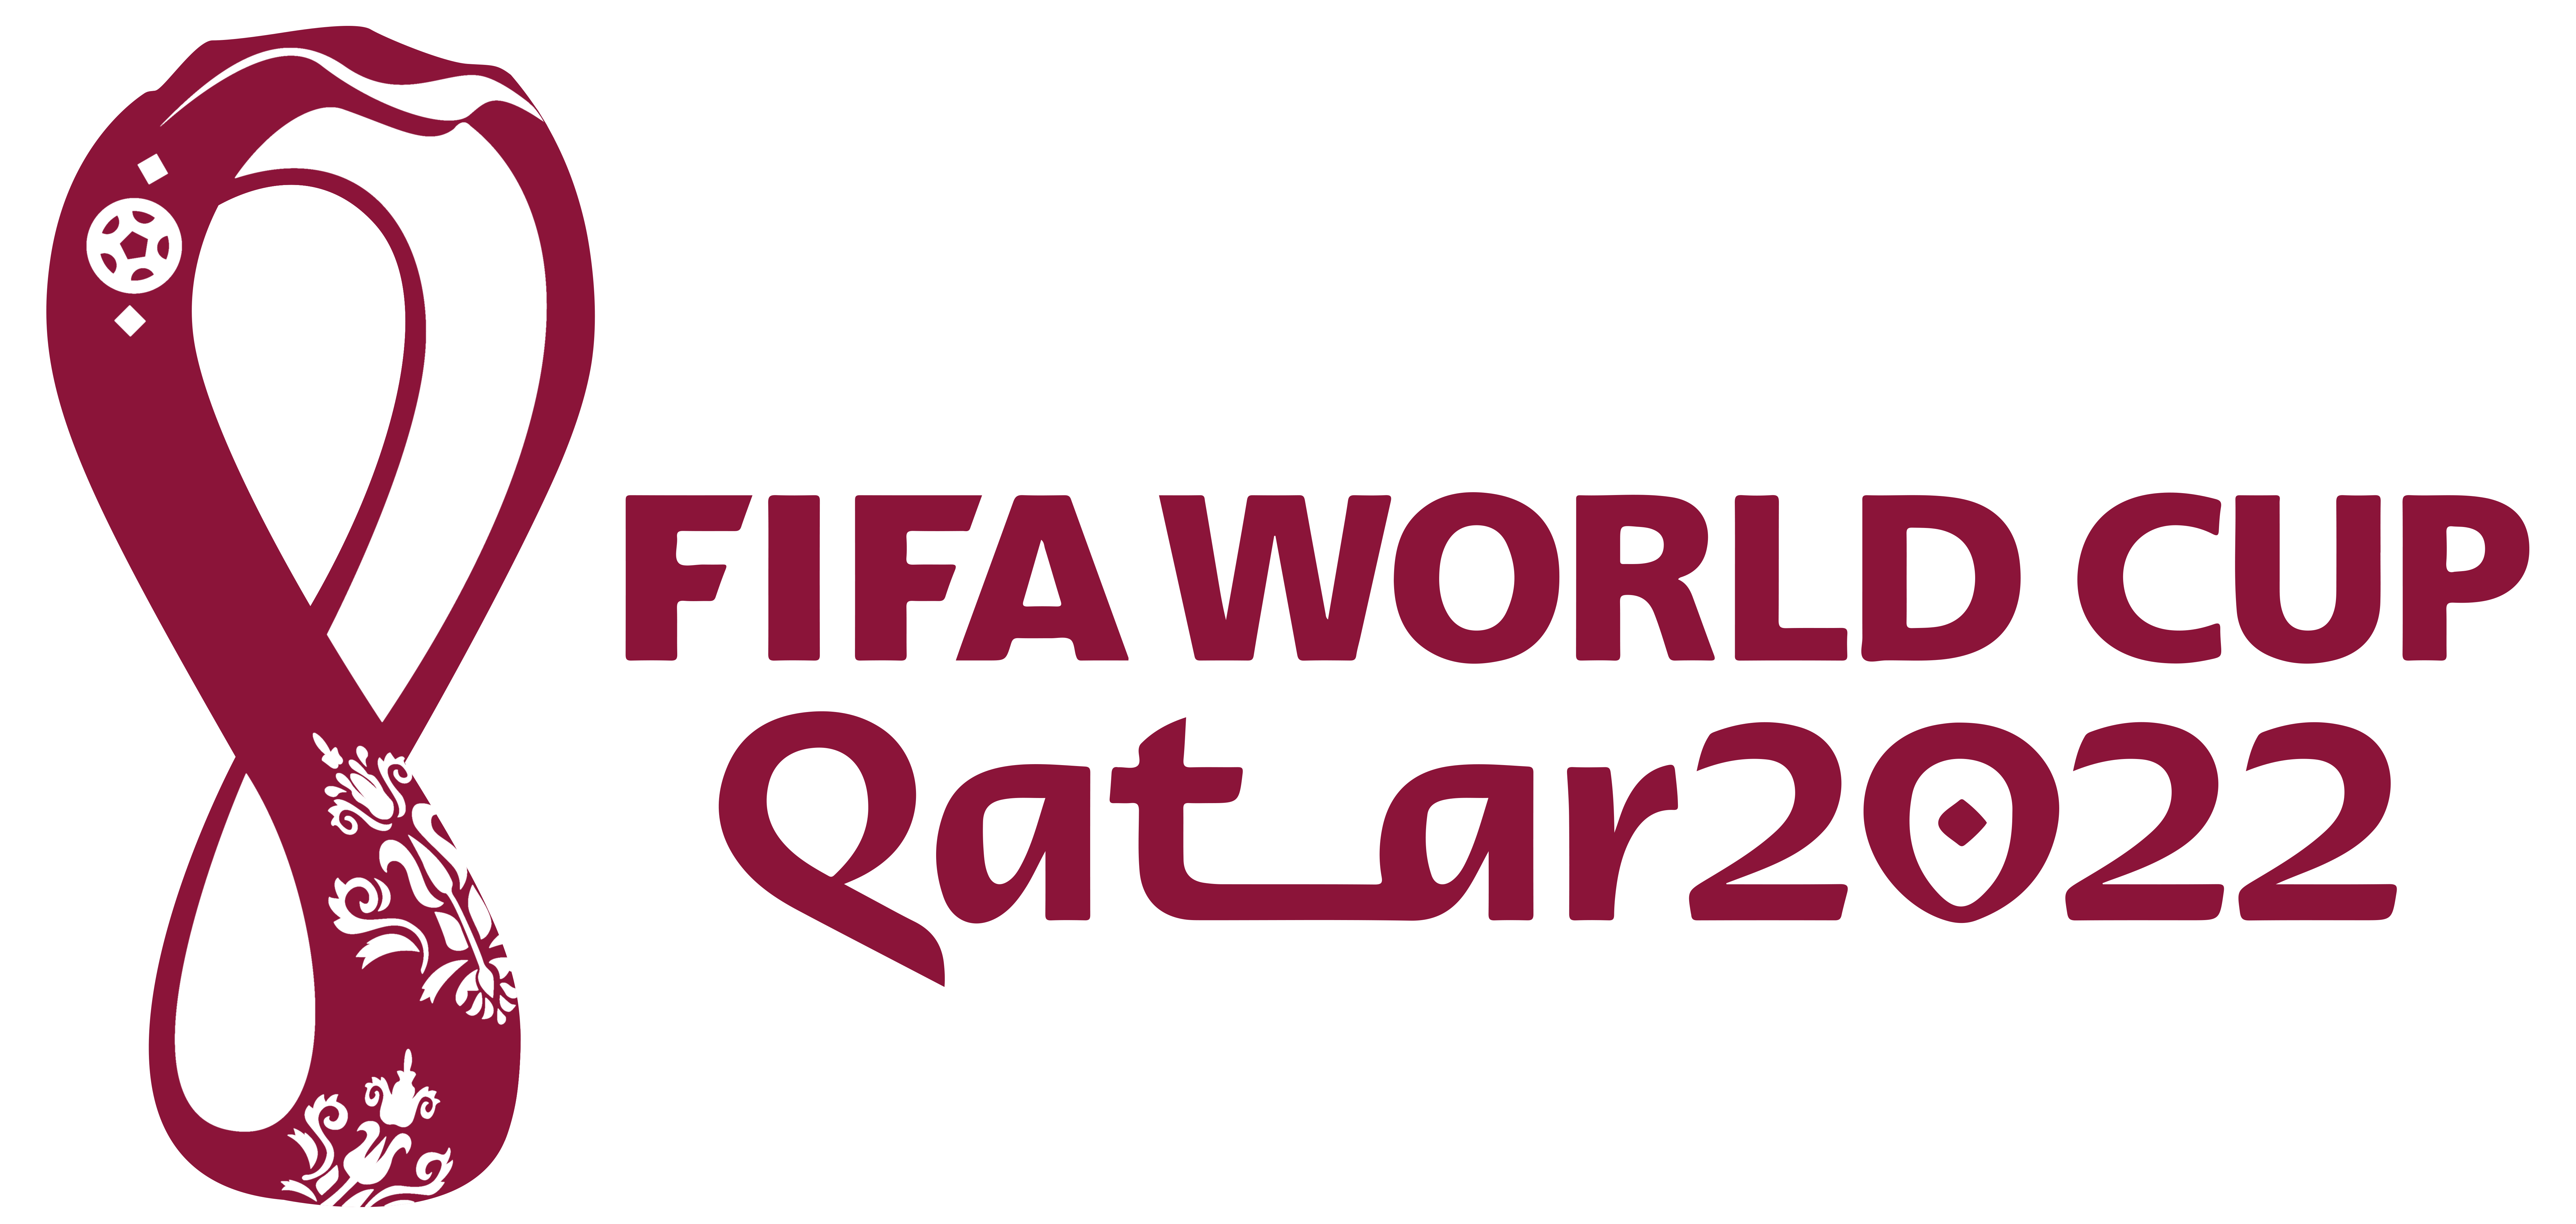 FIFA World Cup Qatar 2022 PNG Image